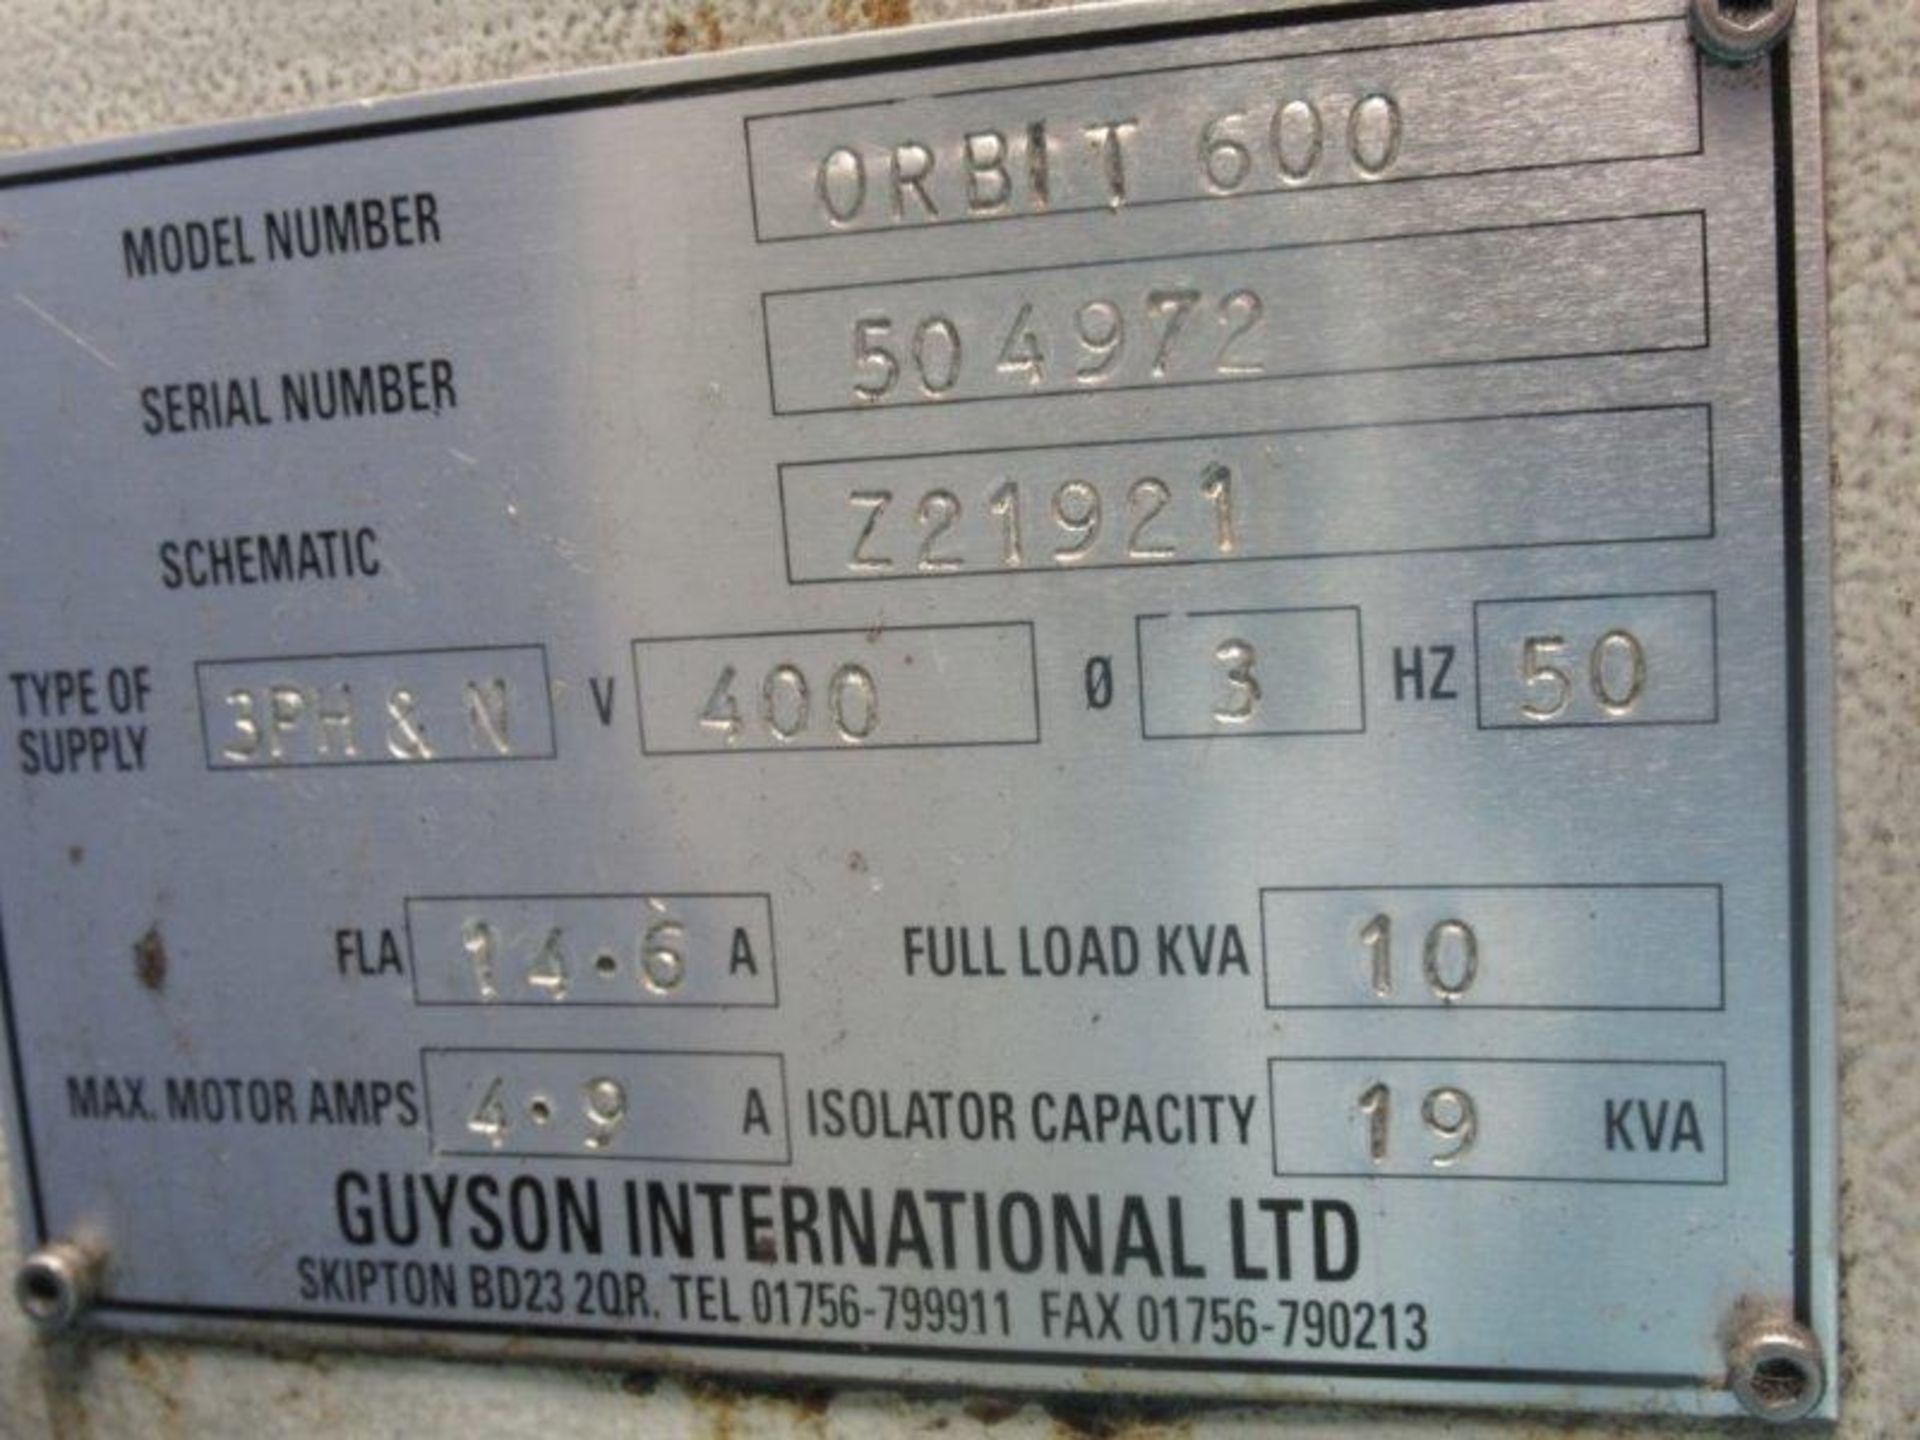 Guyson International Model Orbit 600 Stainless Steel Parts Washer with 24'' Diameter Basket, - Image 4 of 4